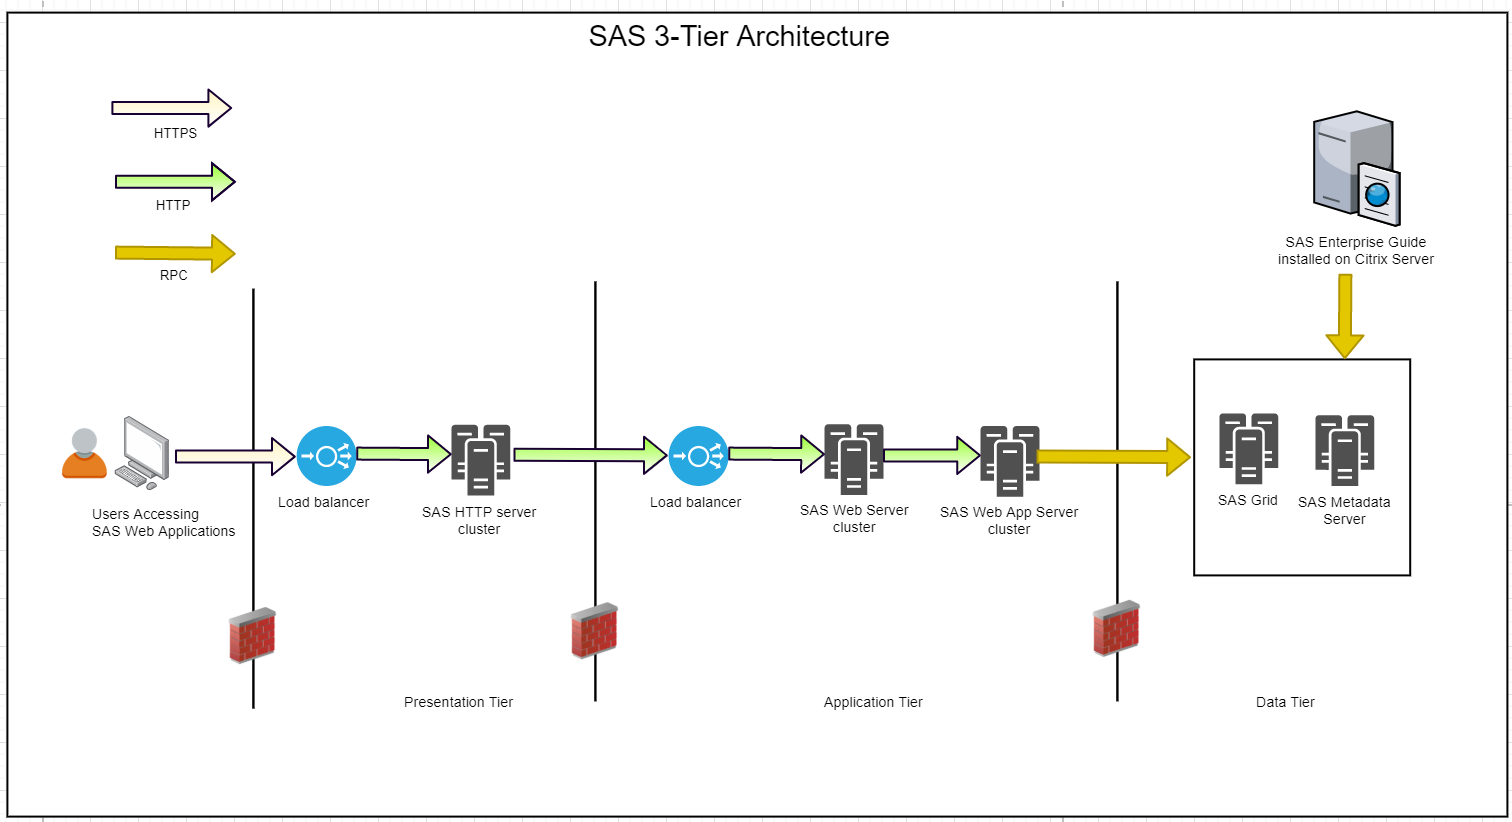 SAS 3-Tier Architecture